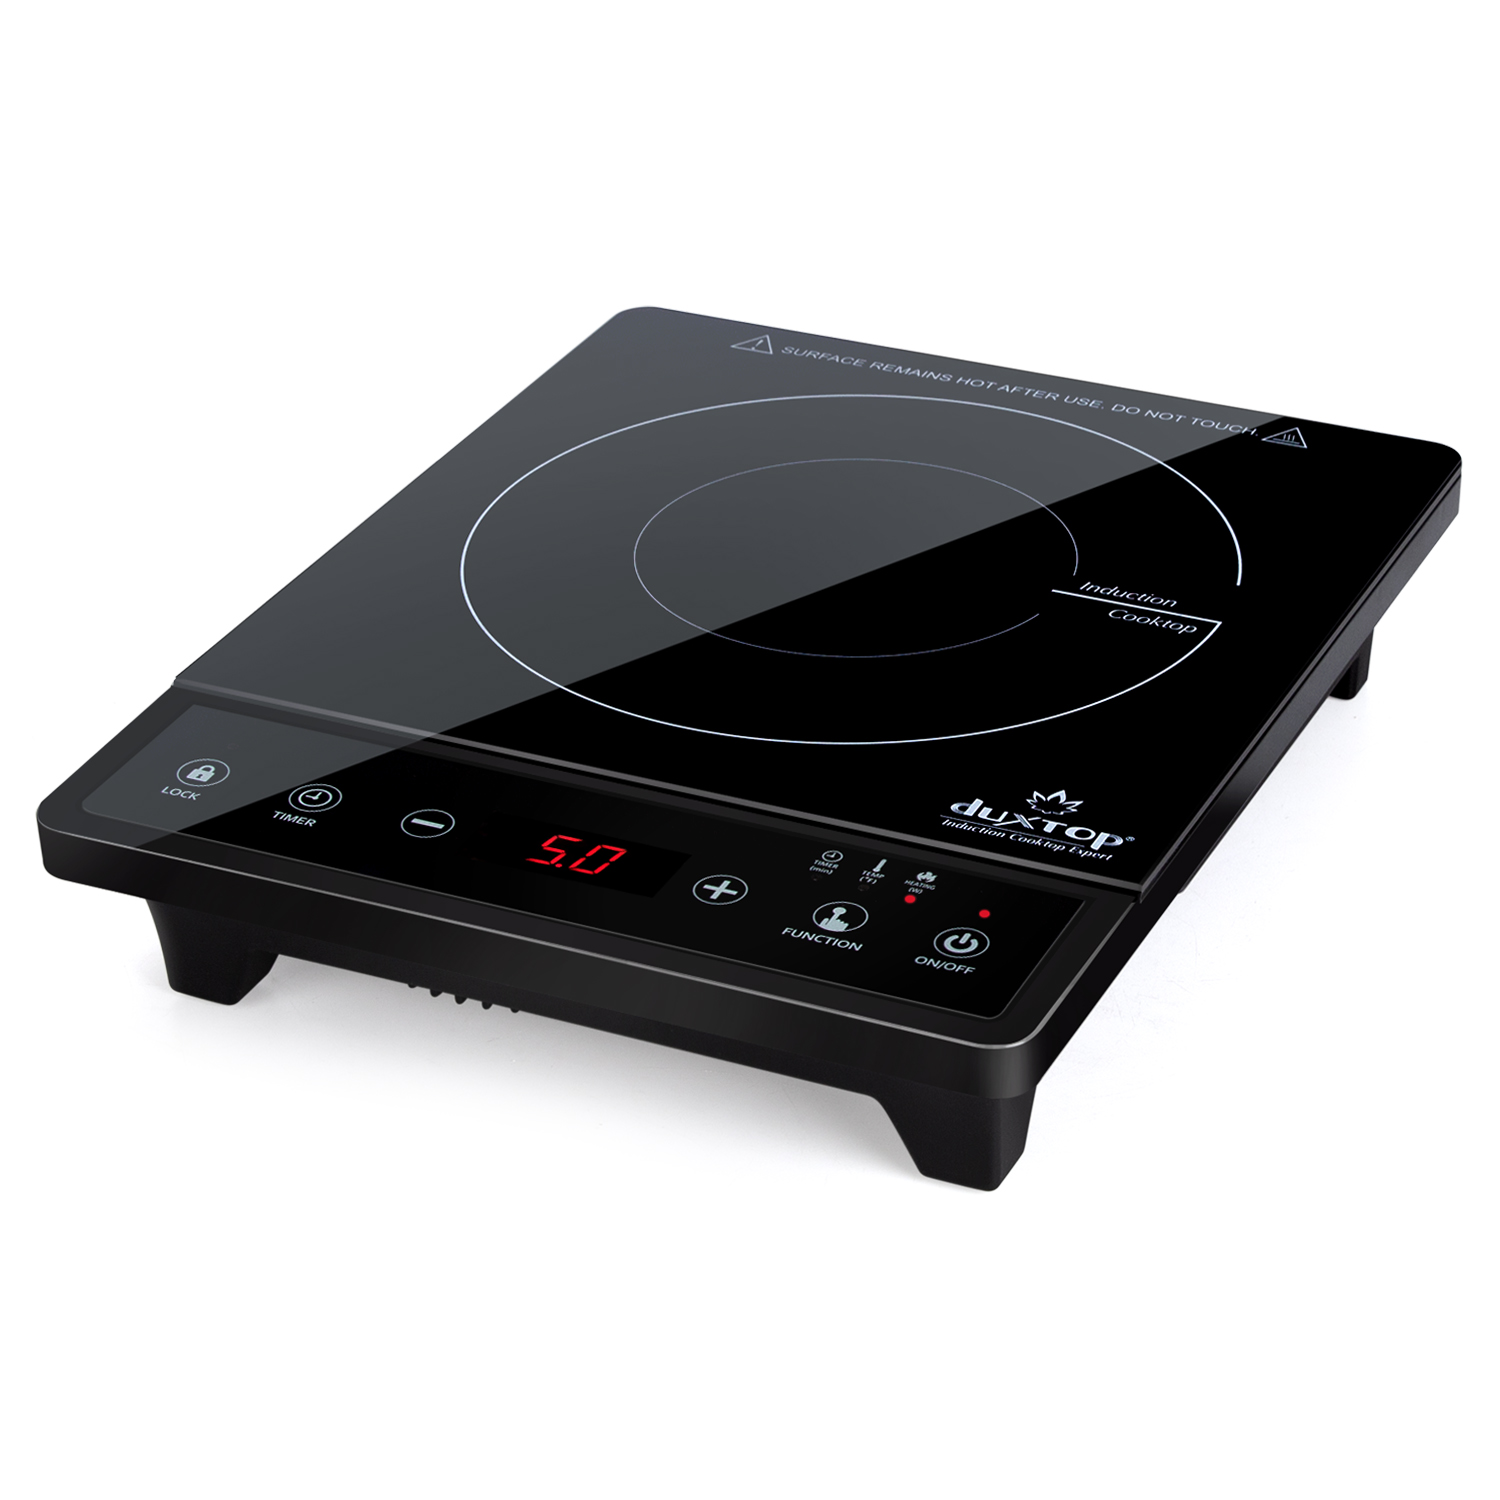 Duxtop 9100MC induction cooktop surface burner stove Secura 1800W